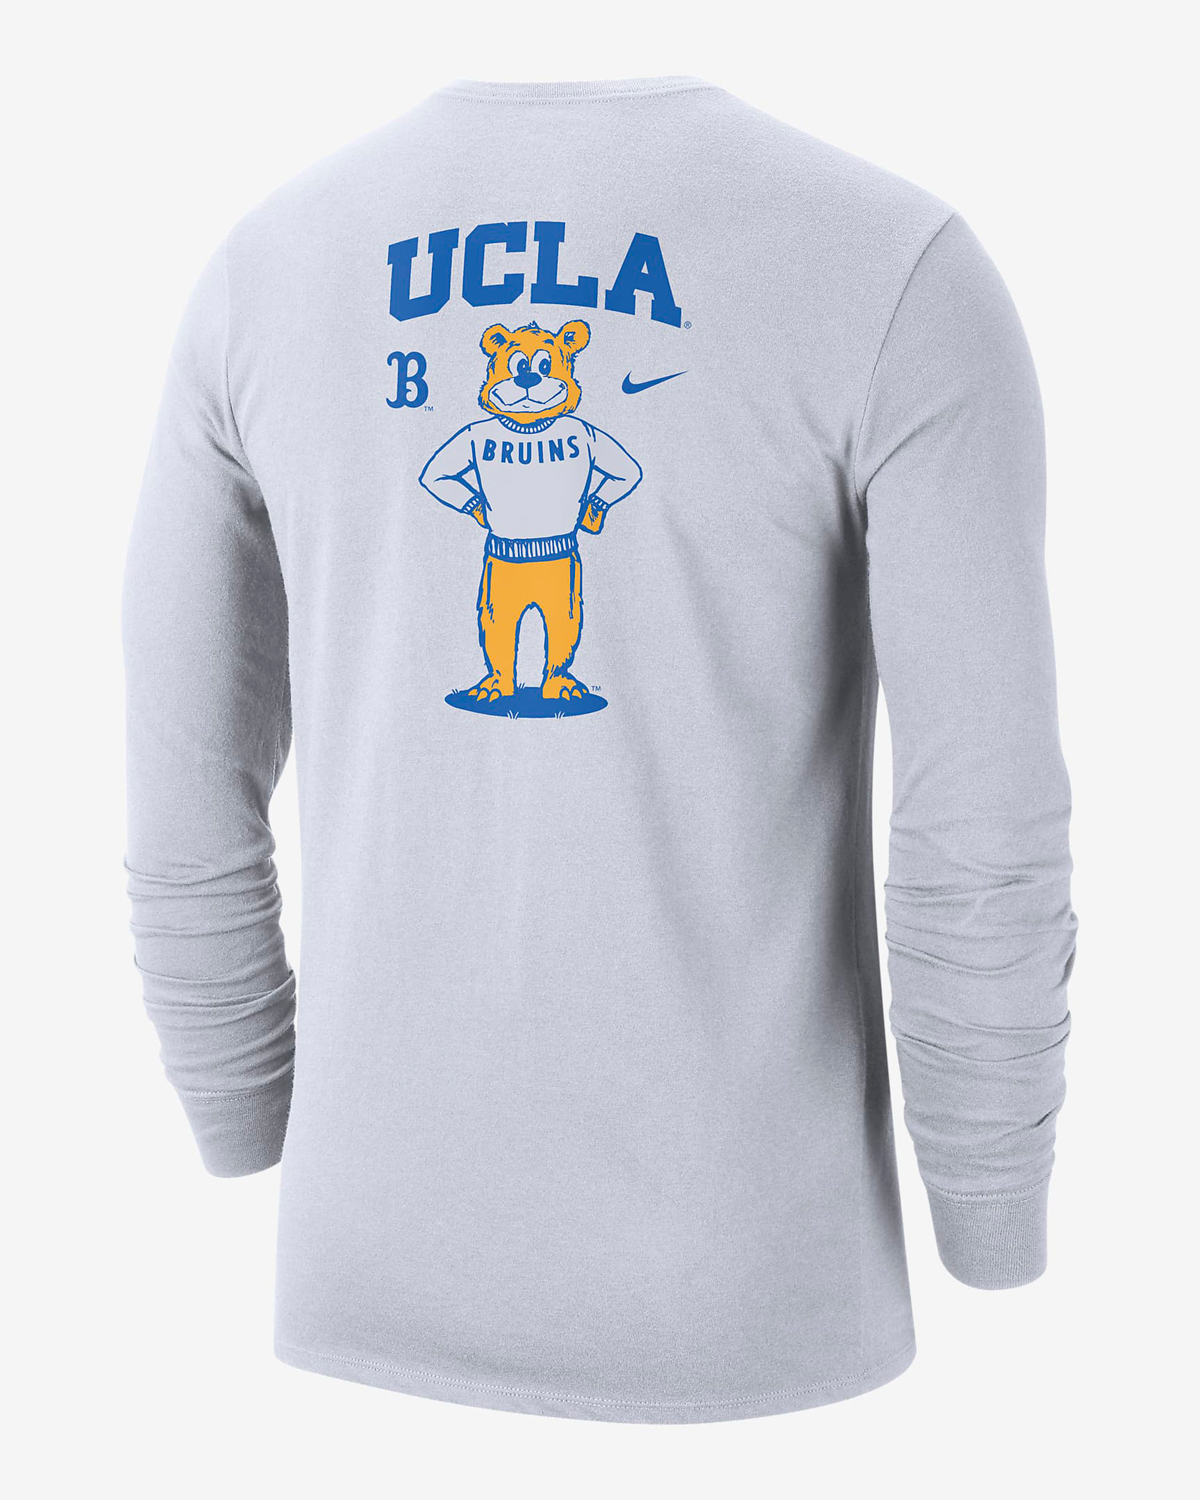 Nike-Dunk-Low-UCLA-Bruins-Shirt-4